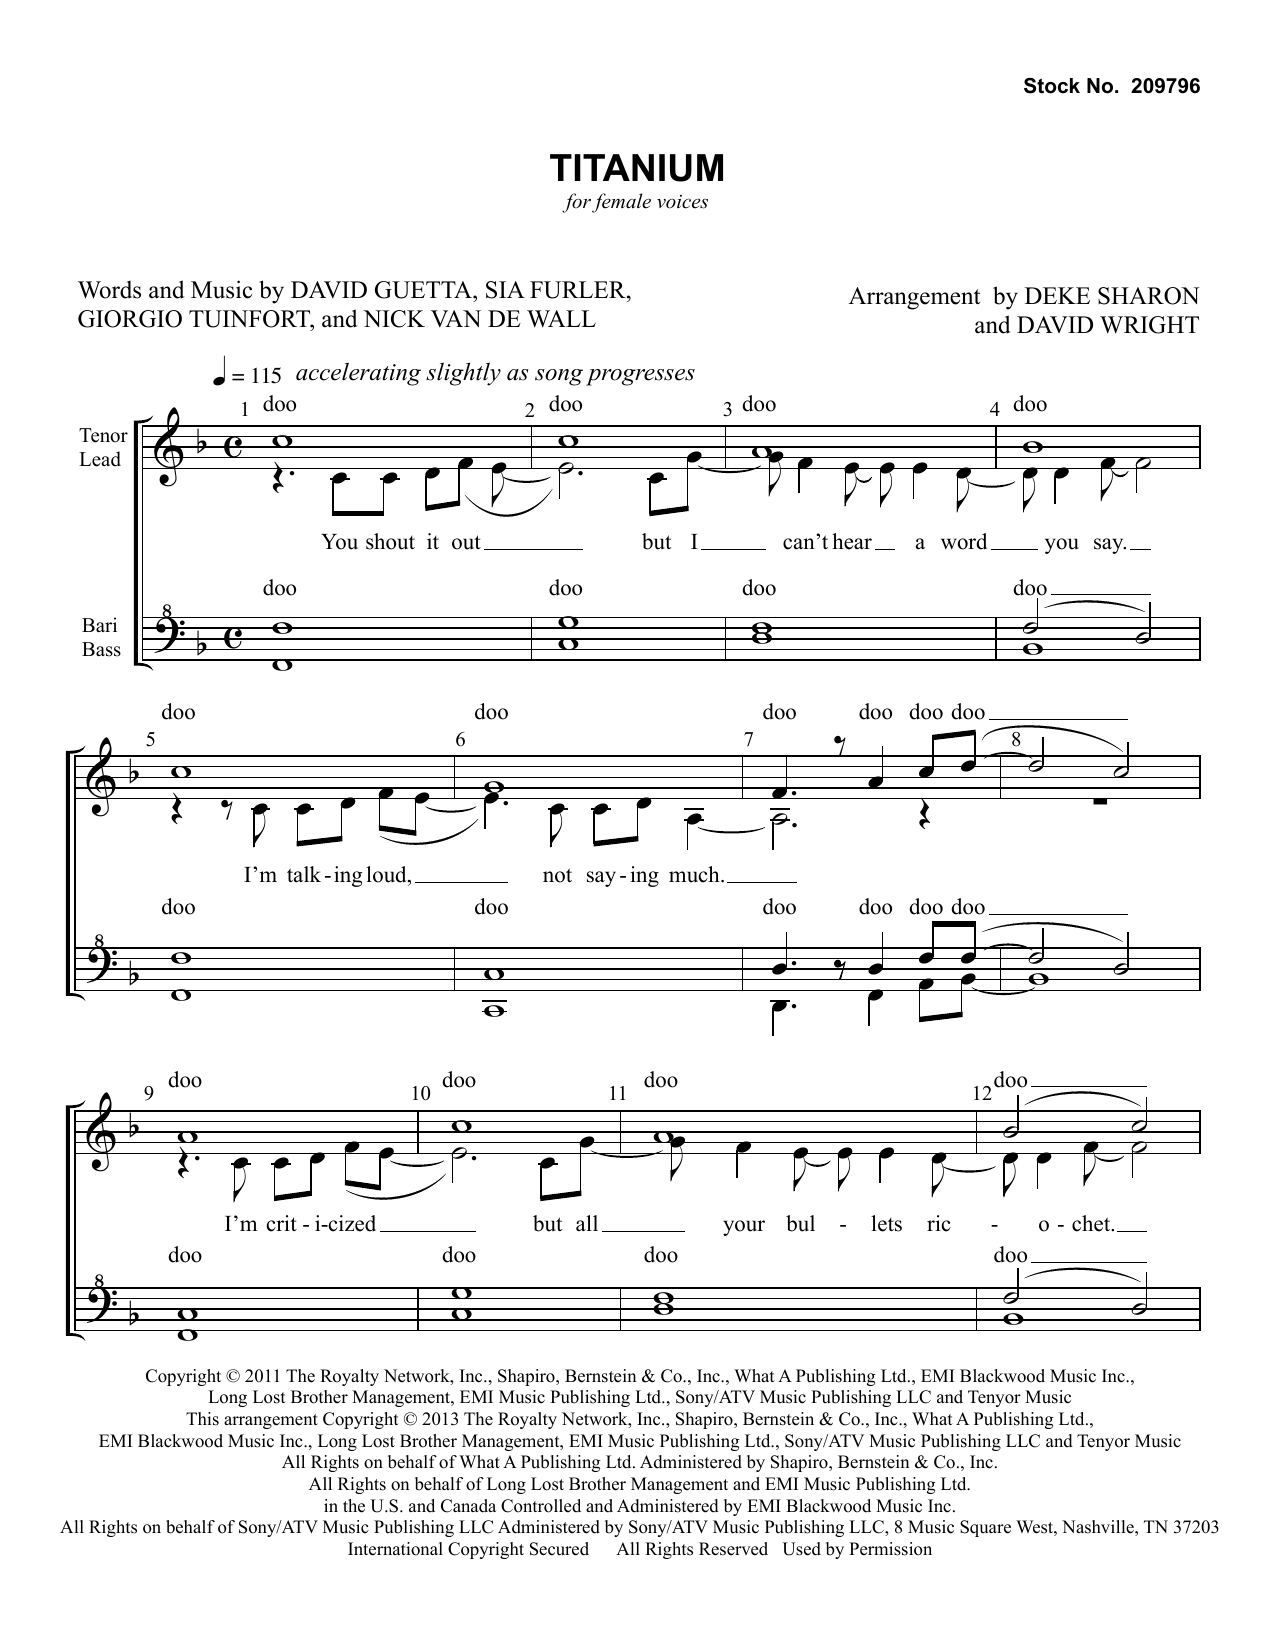 David Guetta Titanium (feat. Sia) (arr. Deke Sharon, David Wright) sheet music notes and chords arranged for SSAA Choir